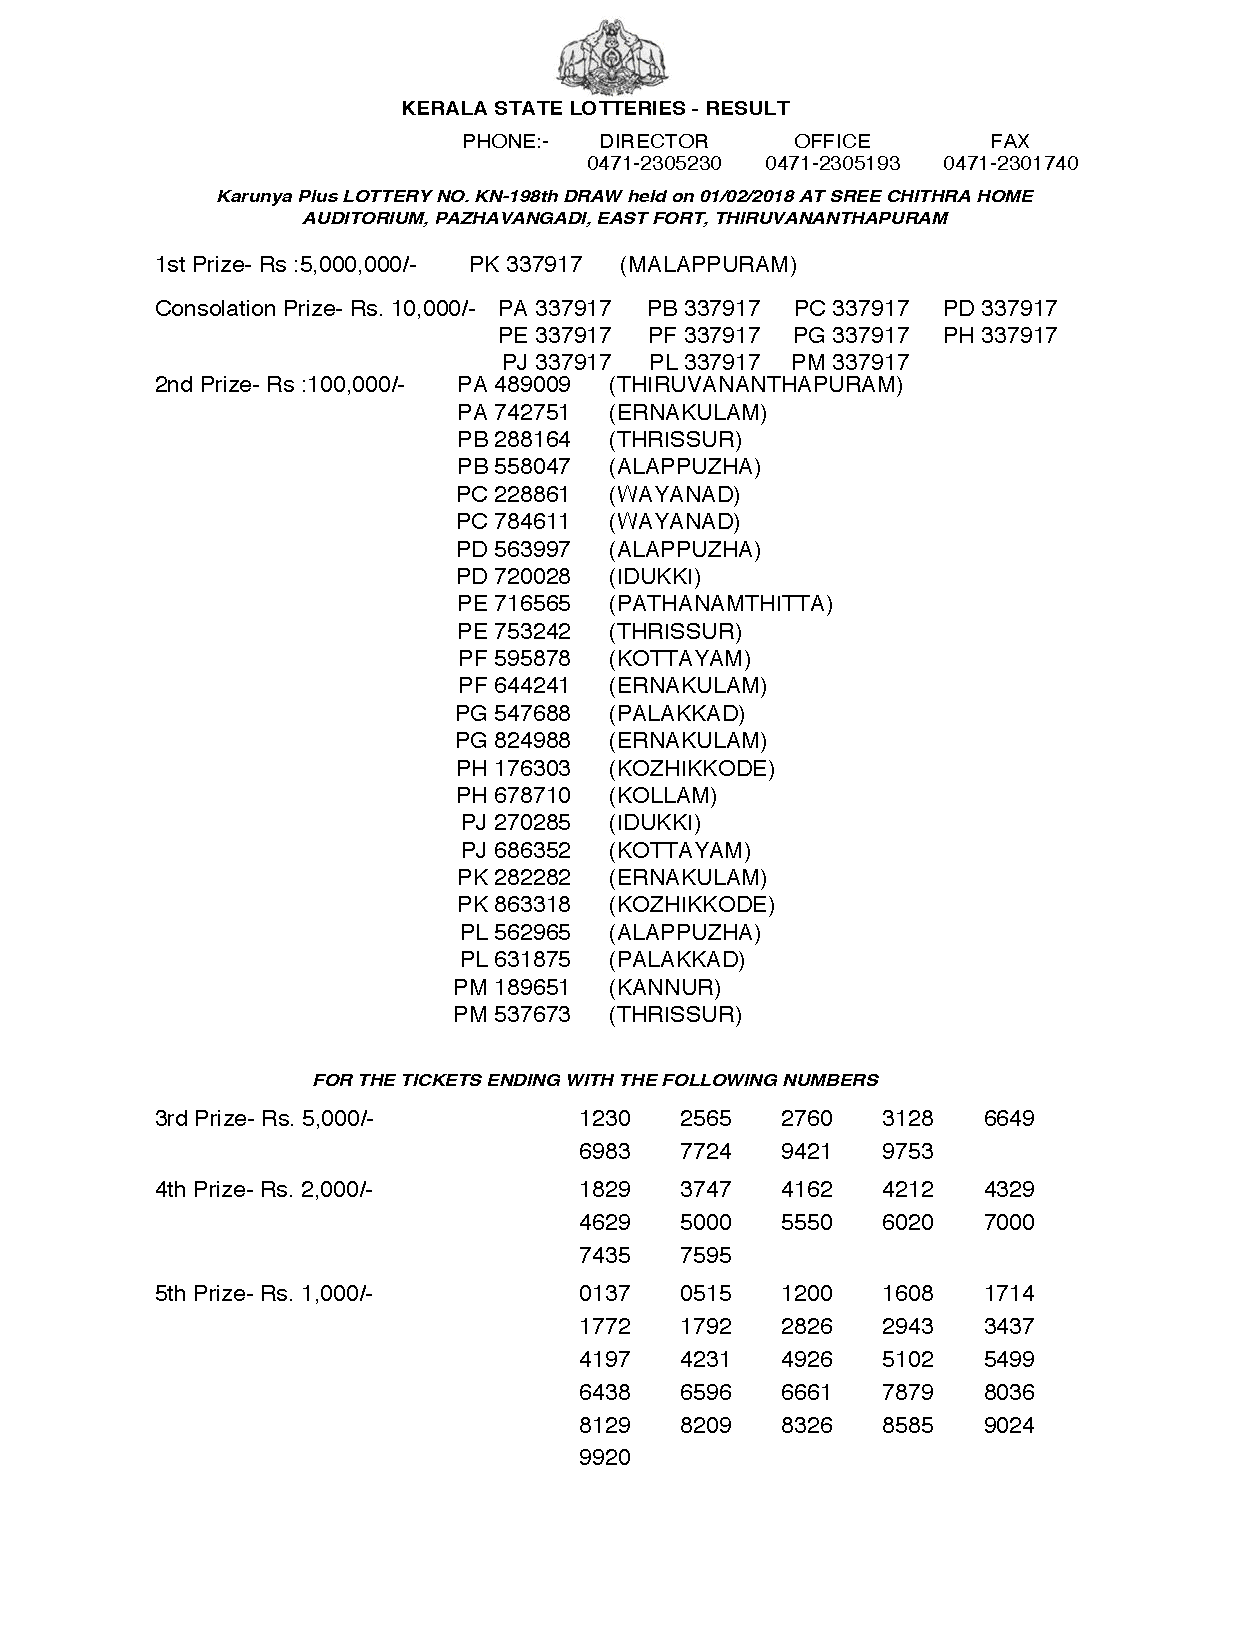 Karunya Plus KN 198 Kerala Lottery Results Page_1